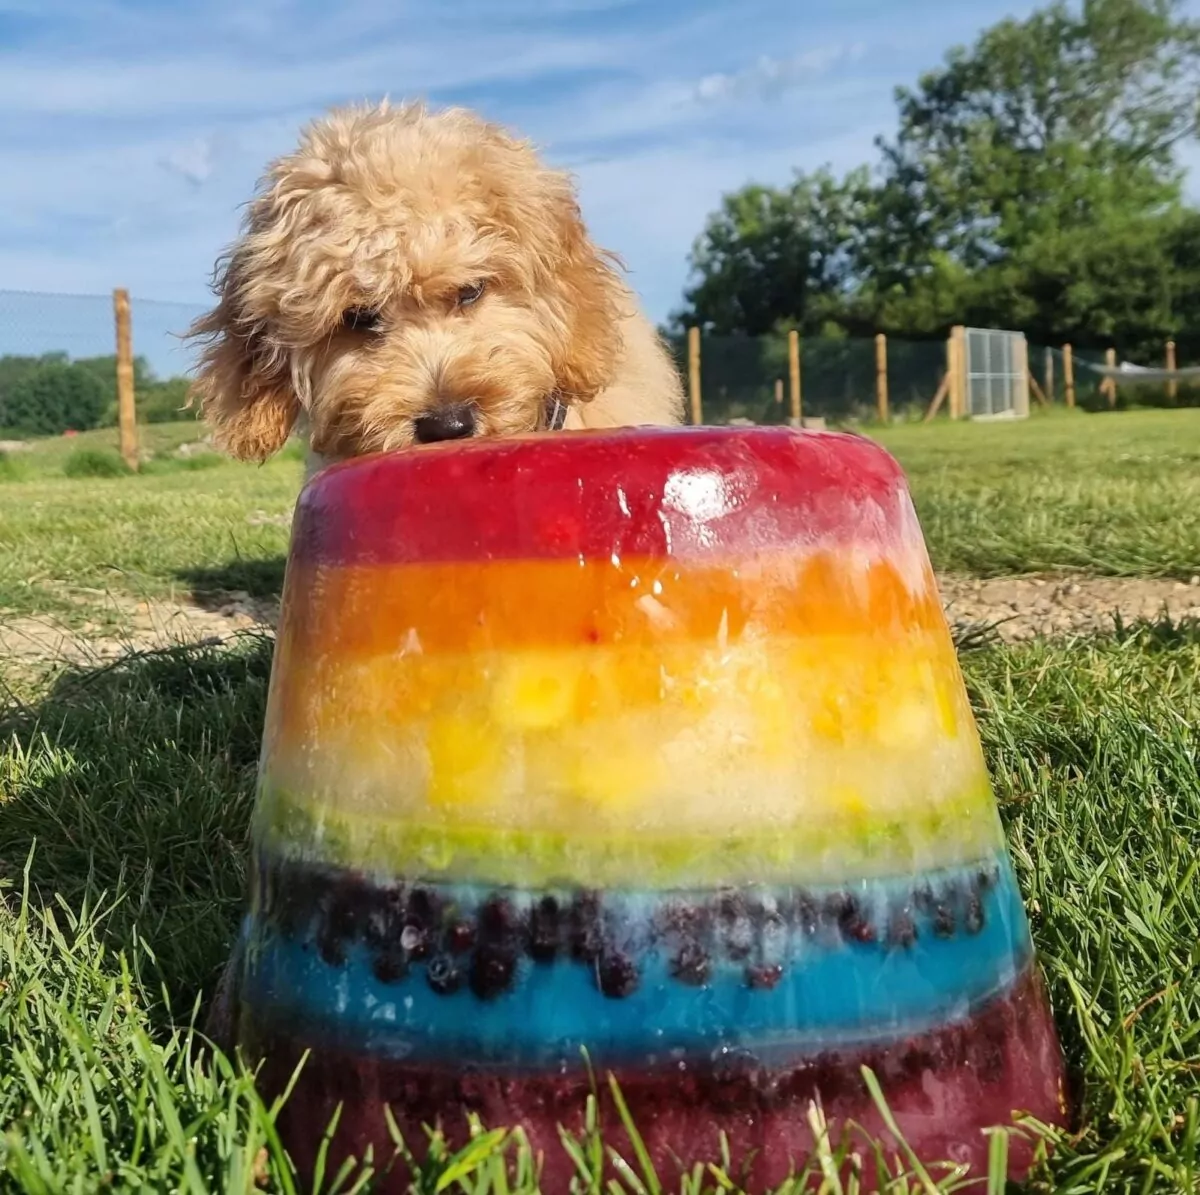 Dog enjoyiny a dog friendly rainbow coloured ice pop